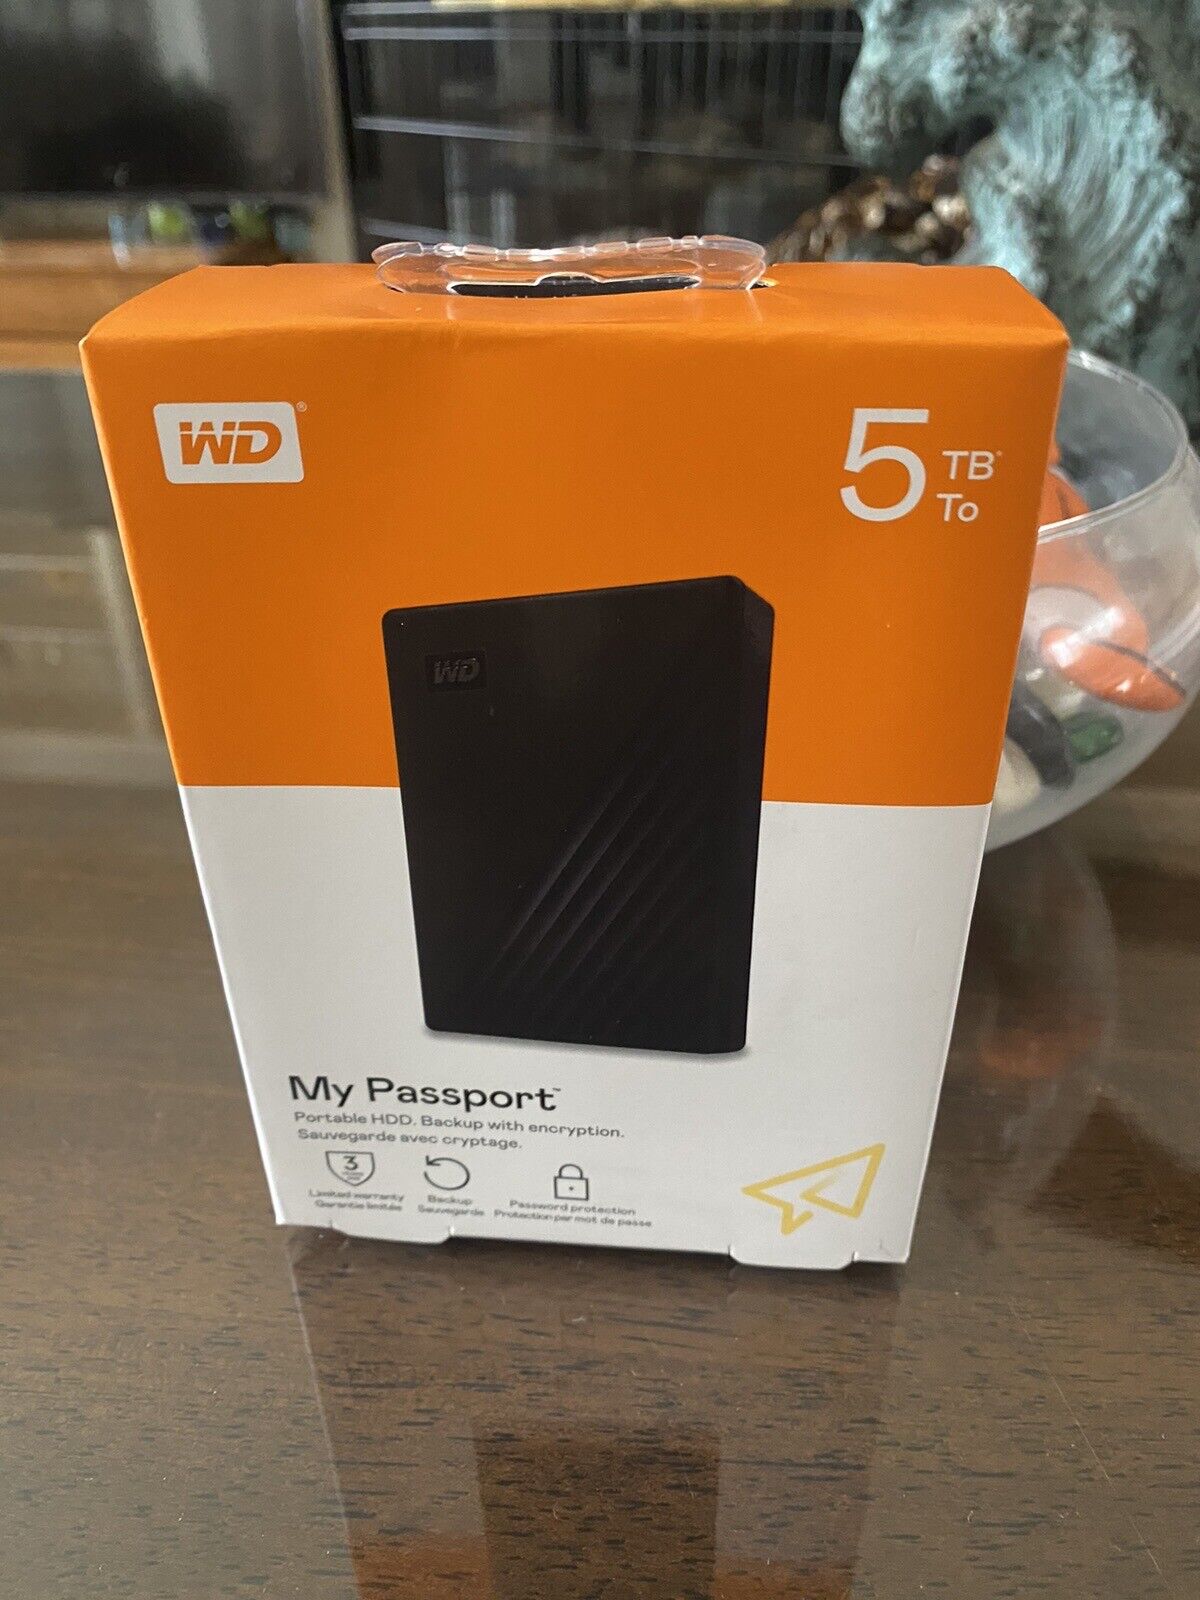 New - WD My Passport 5TB USB 3.0 Portable HDD External Hard Drive - Sealed